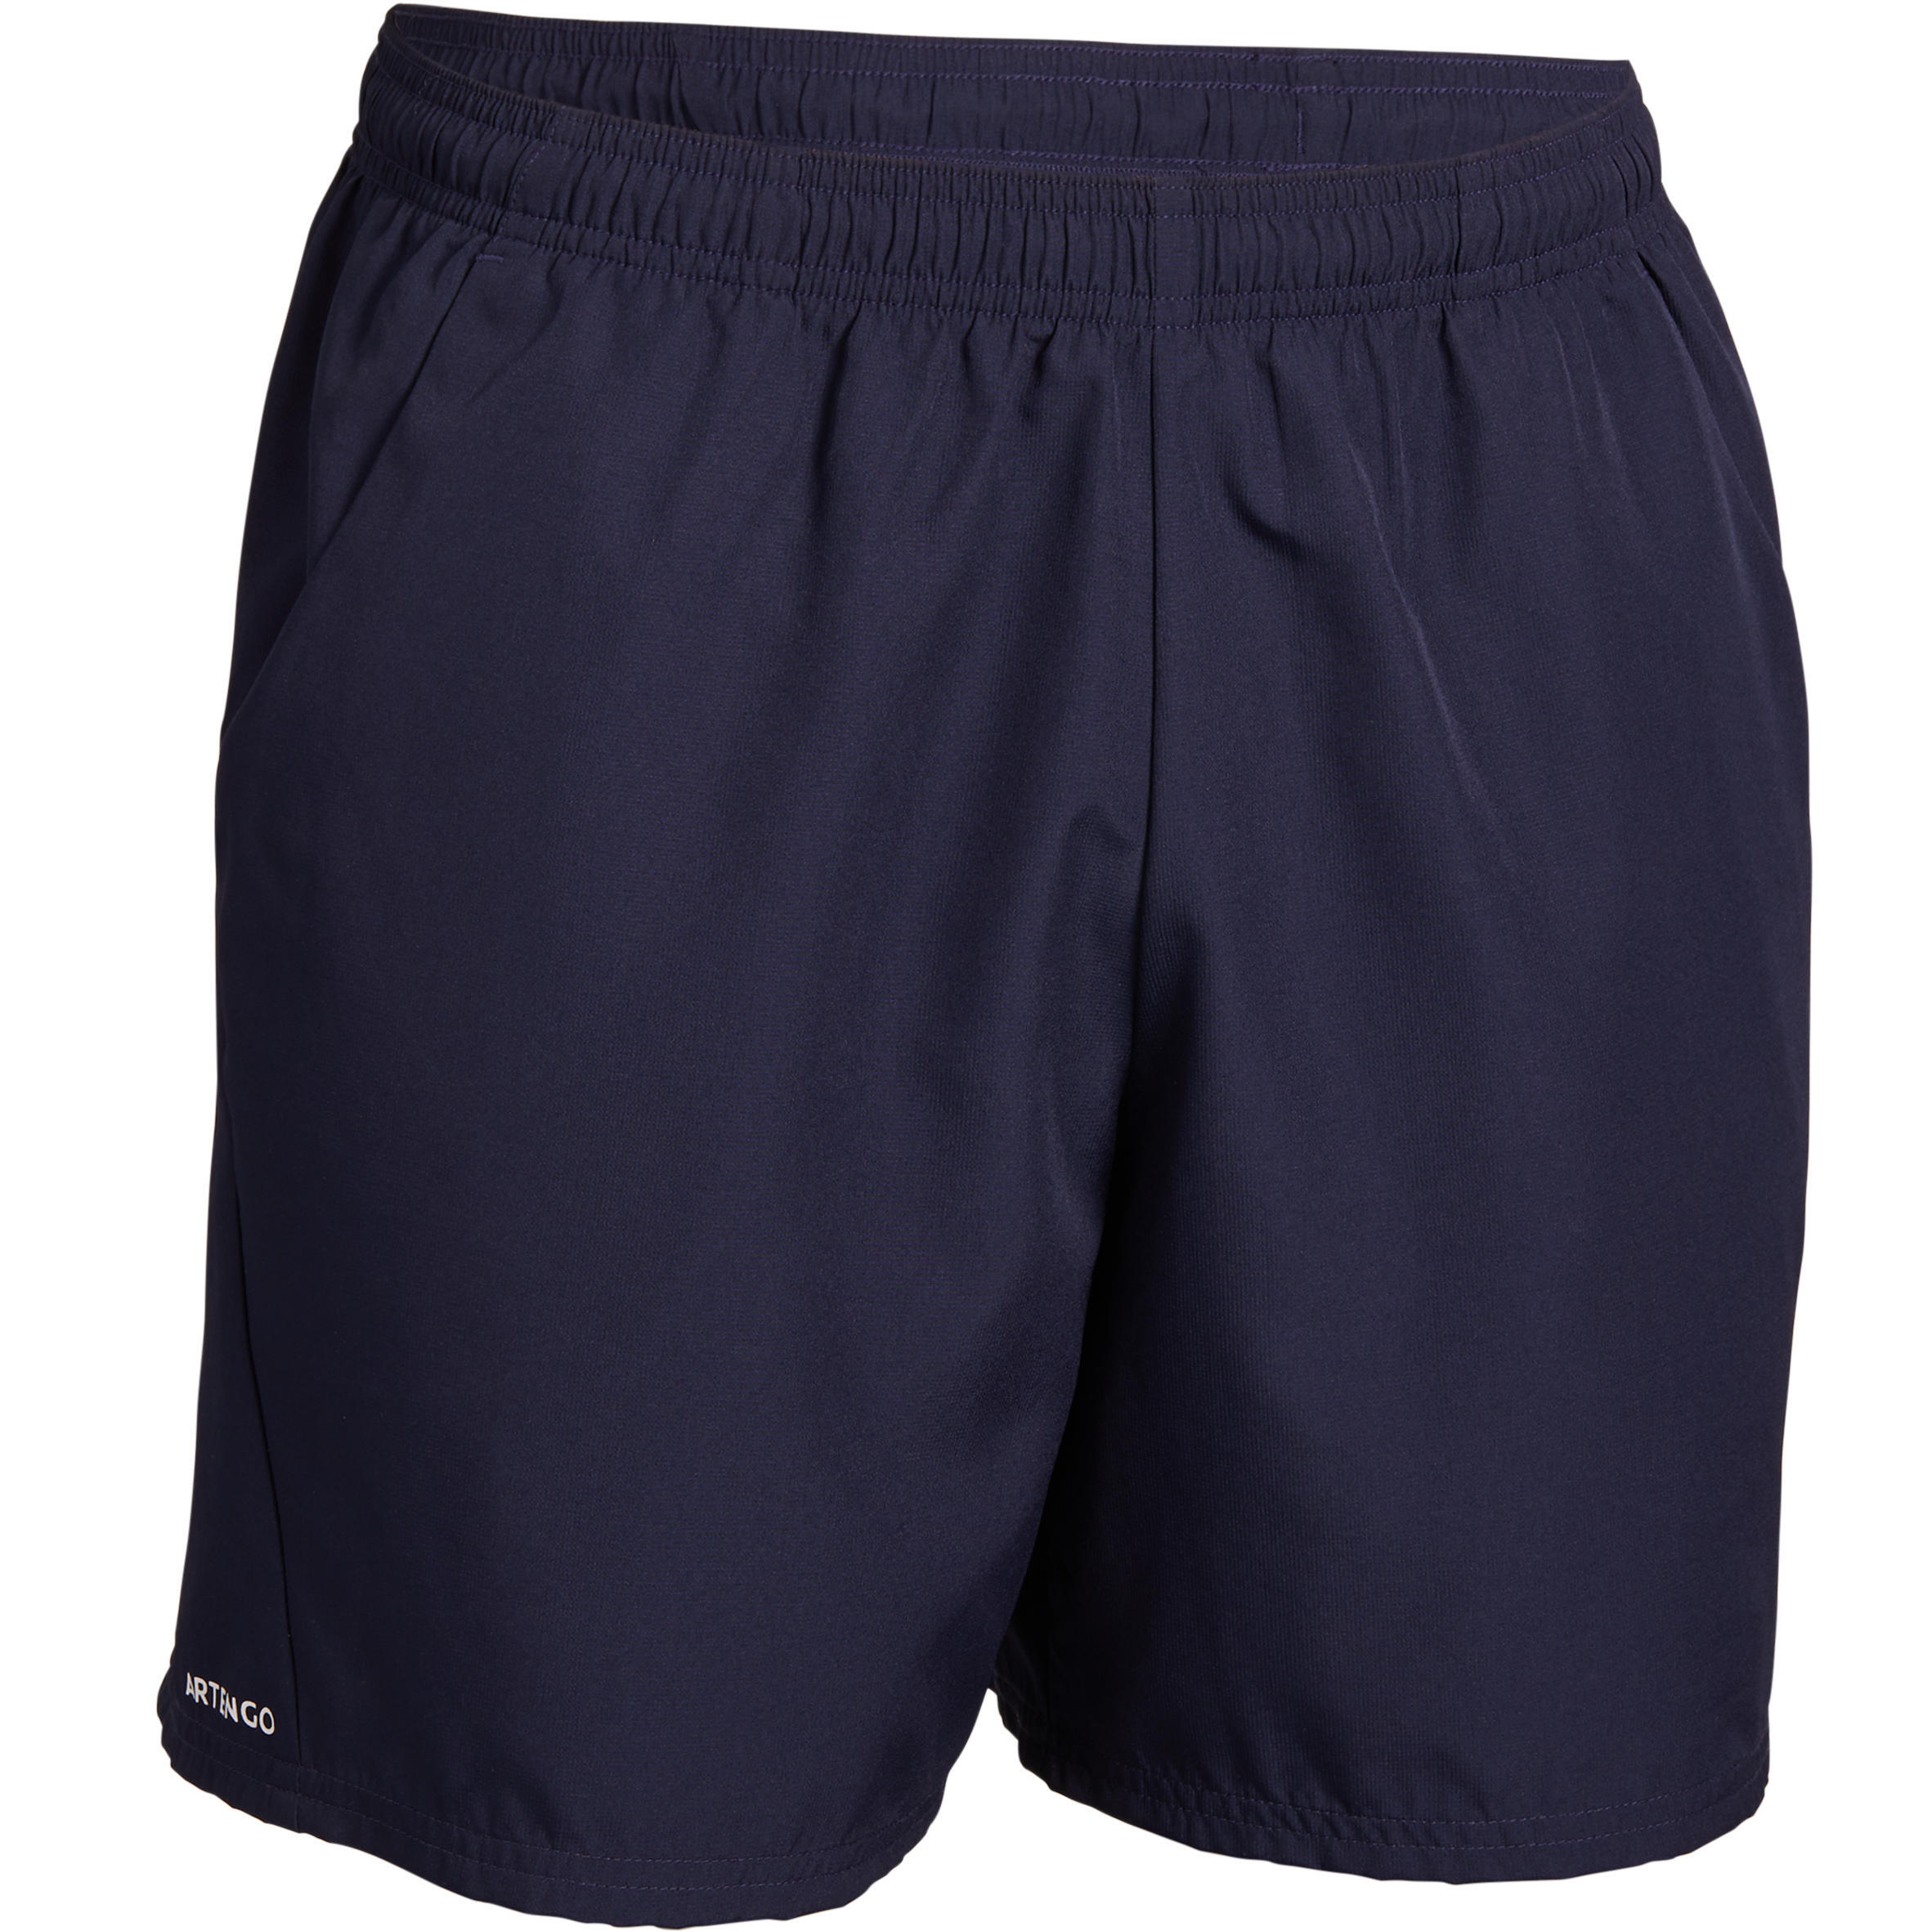 ARTENGO Men's Tennis Shorts Essential - Navy